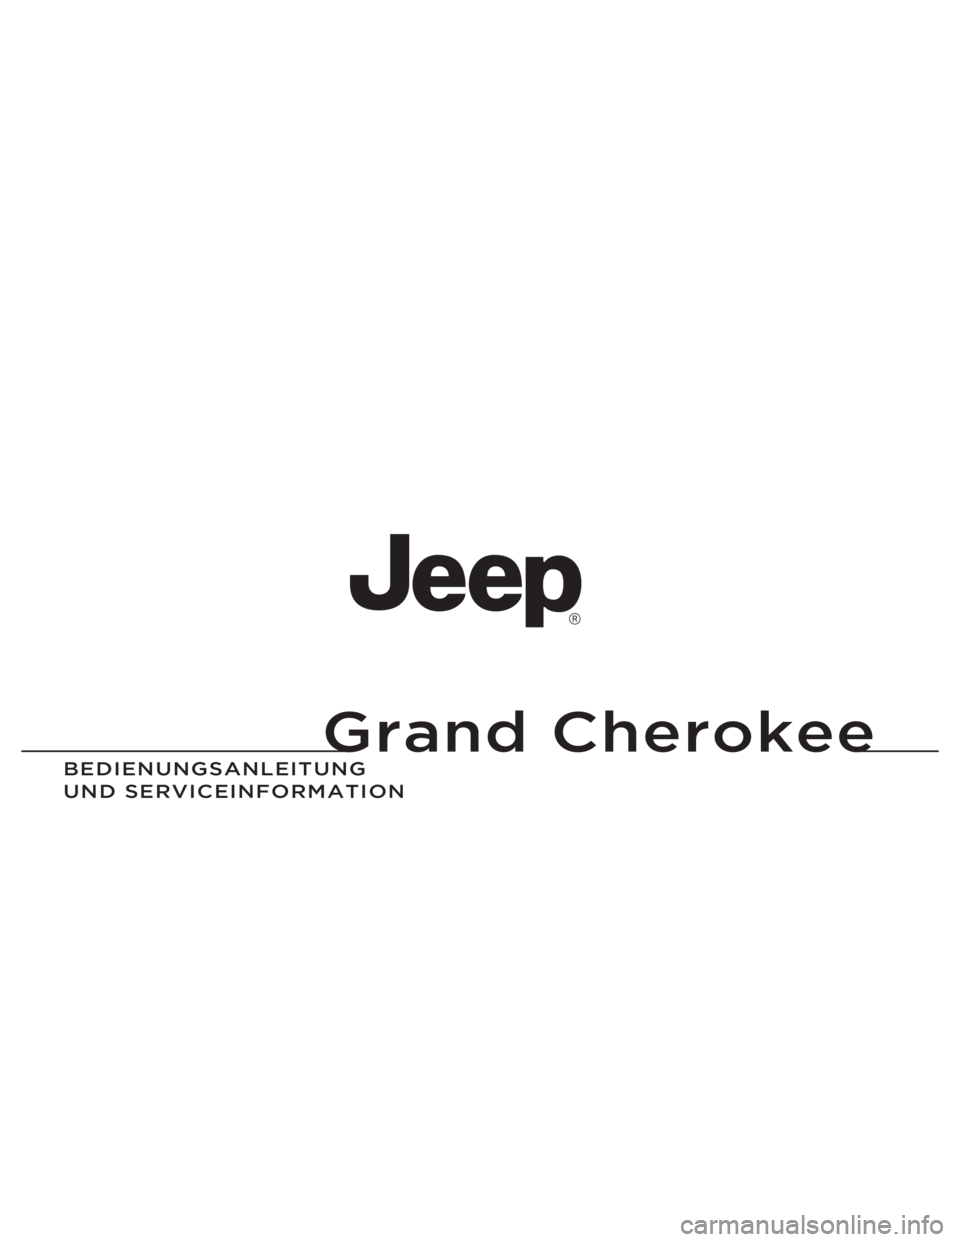 JEEP GRAND CHEROKEE 2014  Betriebsanleitung (in German) Grand Cherokee
BEDIENUNGSAN\fEITUNG\A 
UND SERVICEIN\bORMATIO\AN
Grand Cherokee
14WK741-126-GER-AAGedruckt in Europa 14 